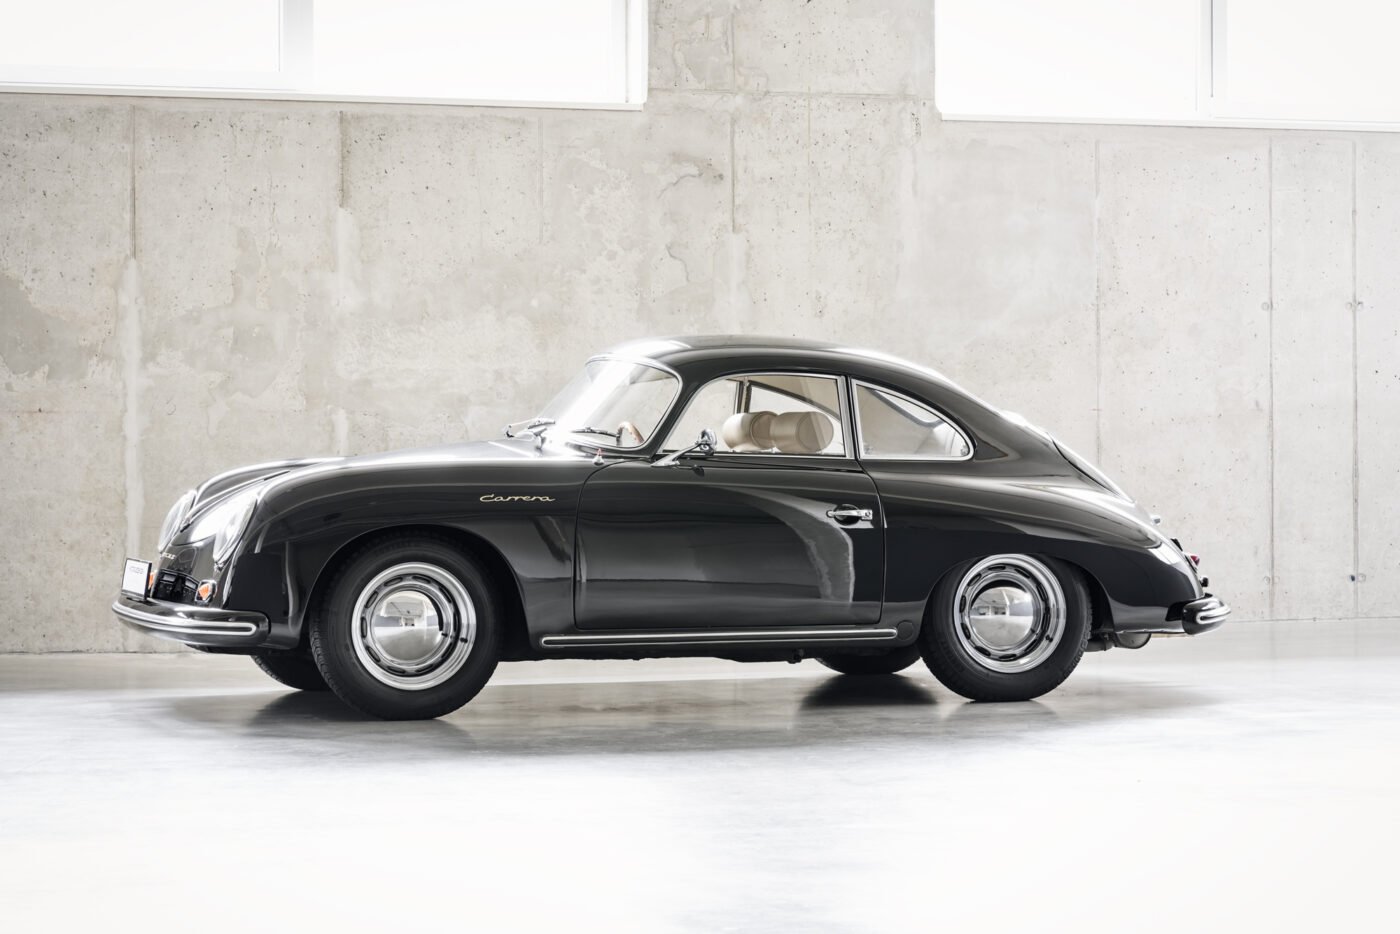 1956 Porsche (356) for sale - Elferspot - Marketplace for Porsche